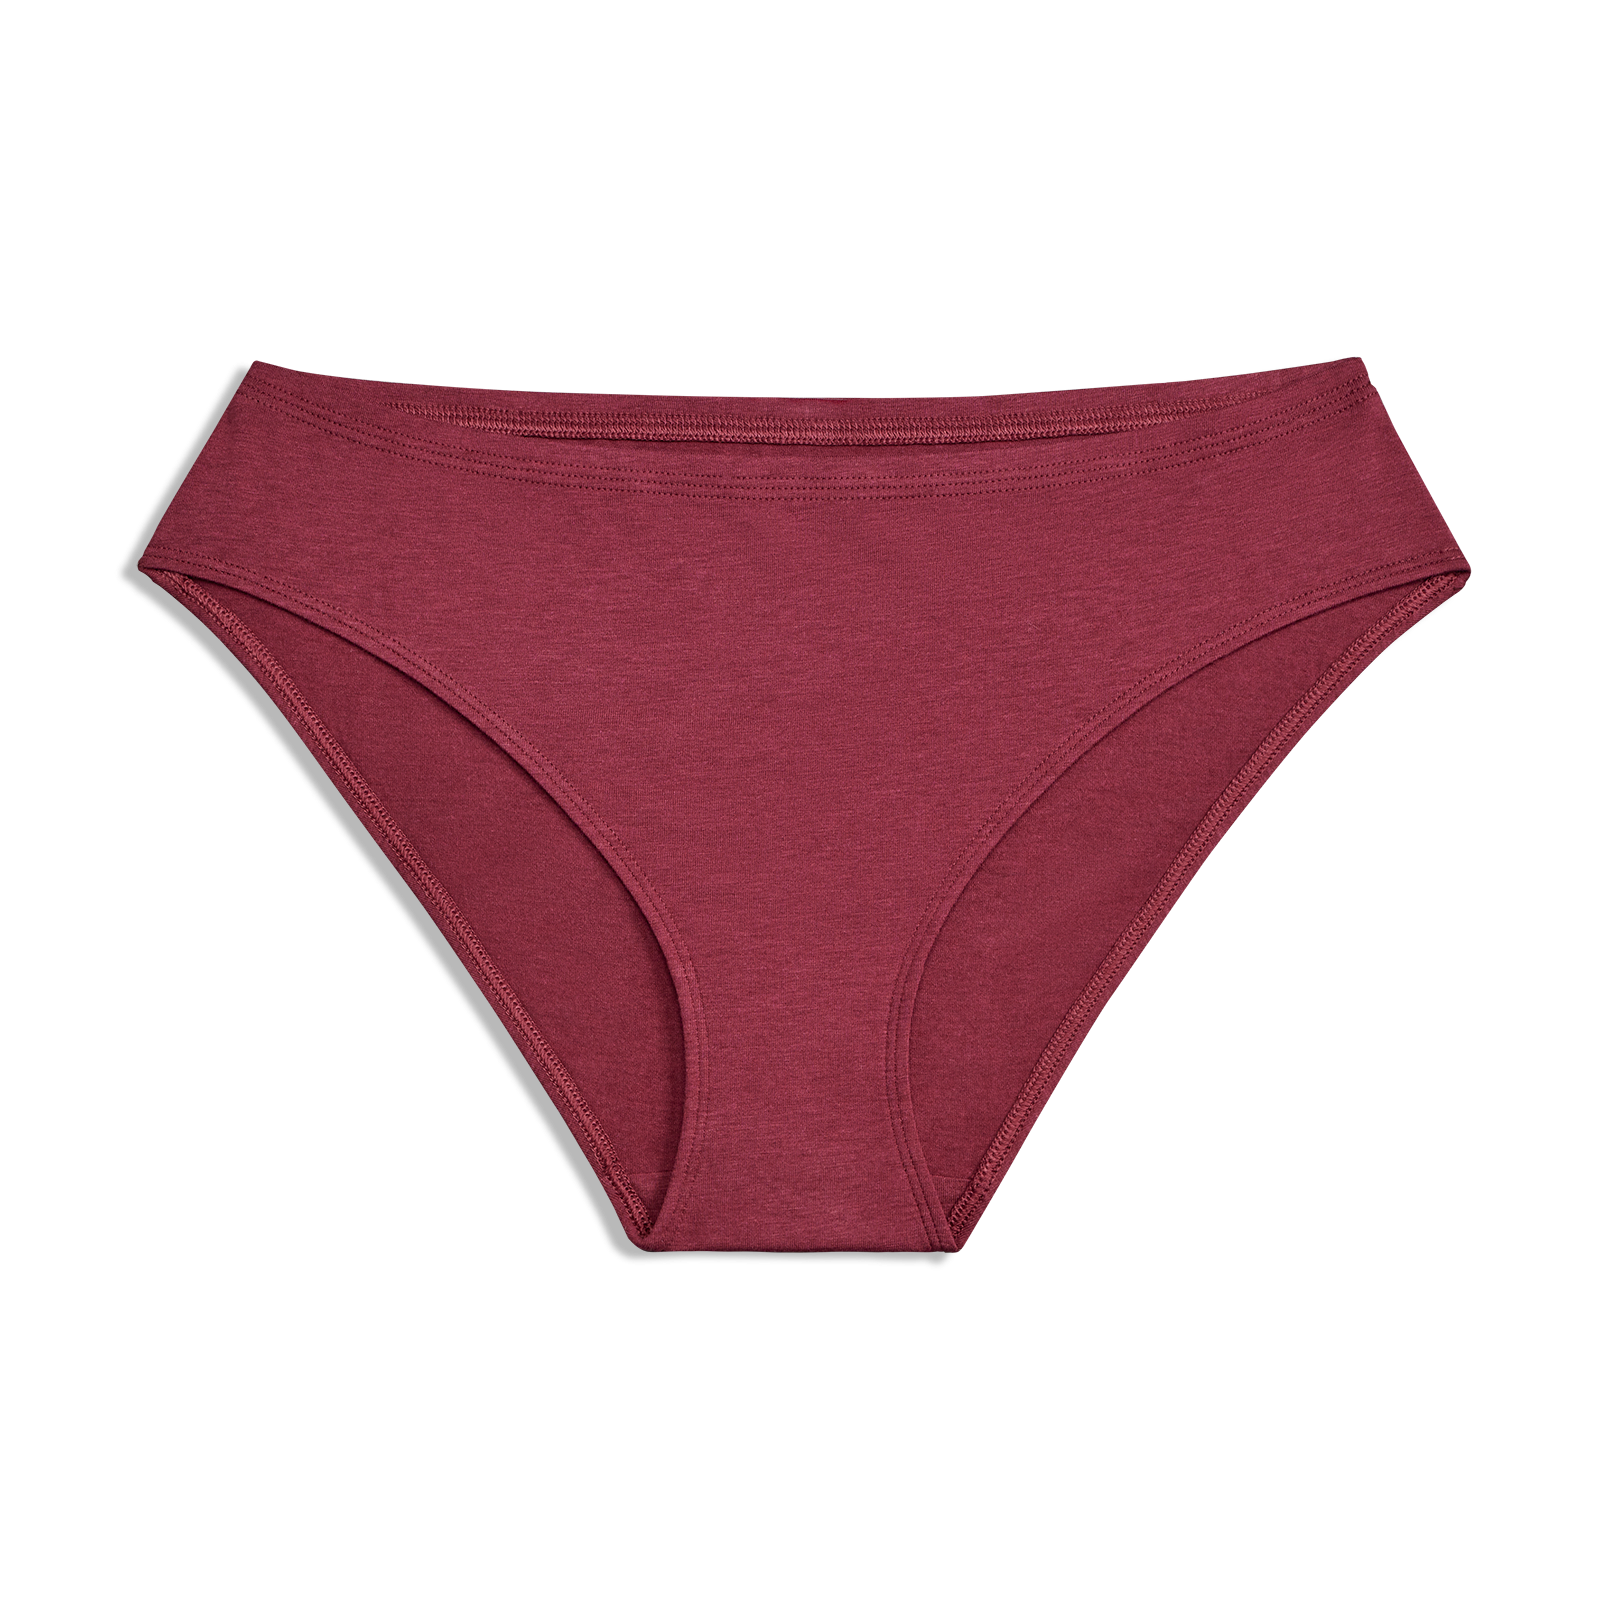 Women's Underwear -  Canada